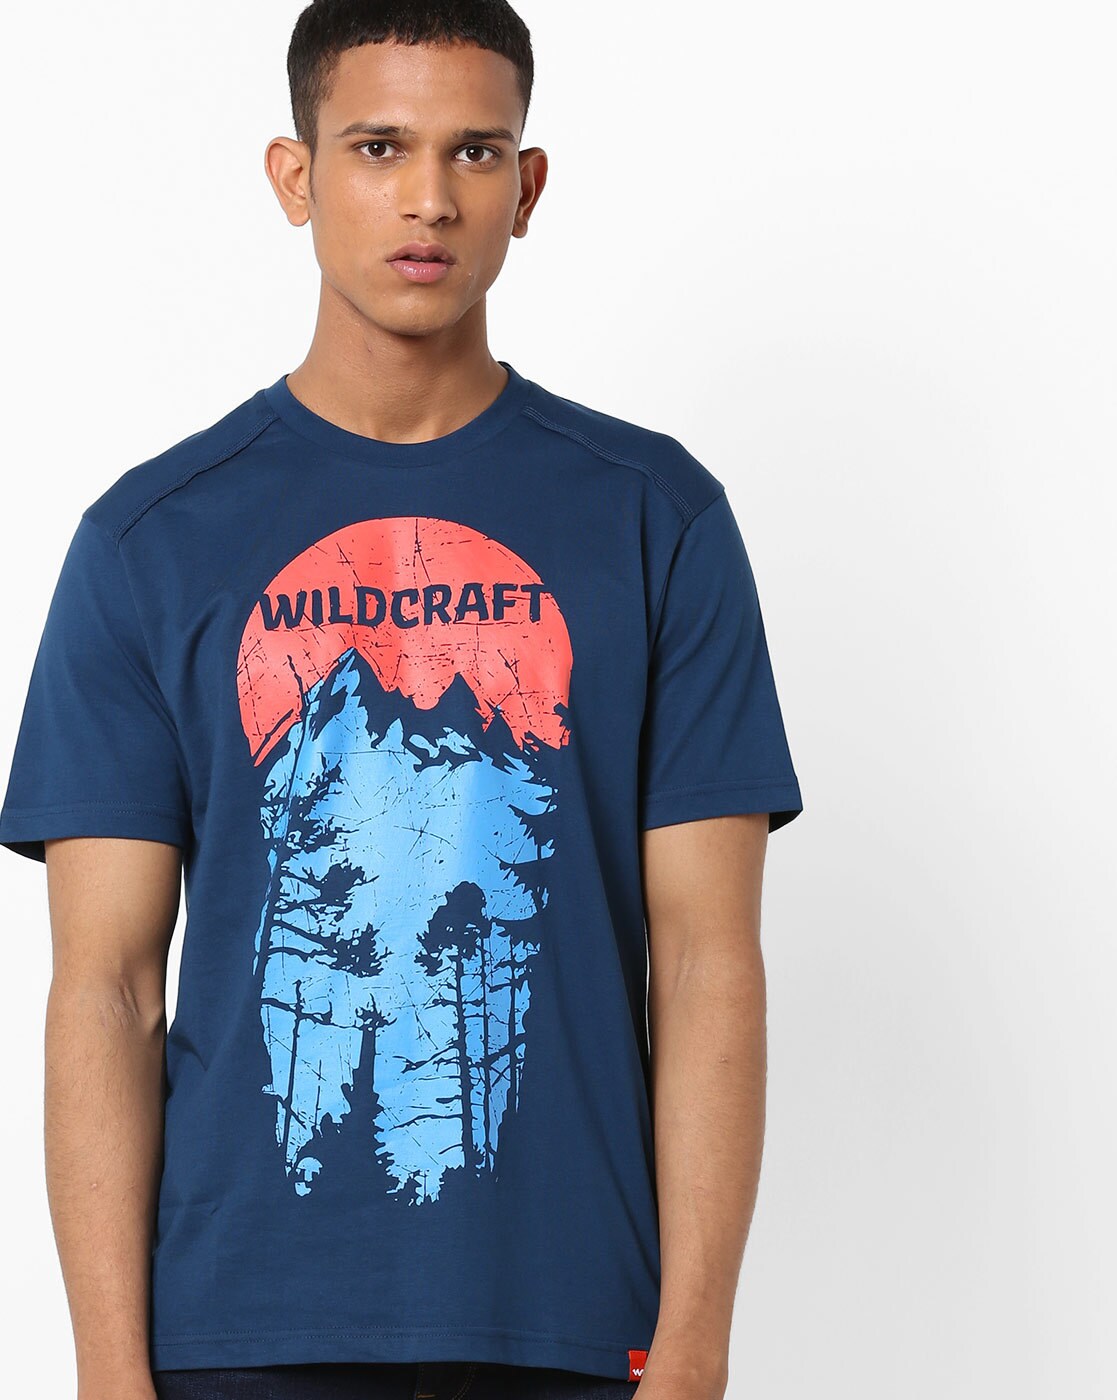 wildcraft t shirts online india